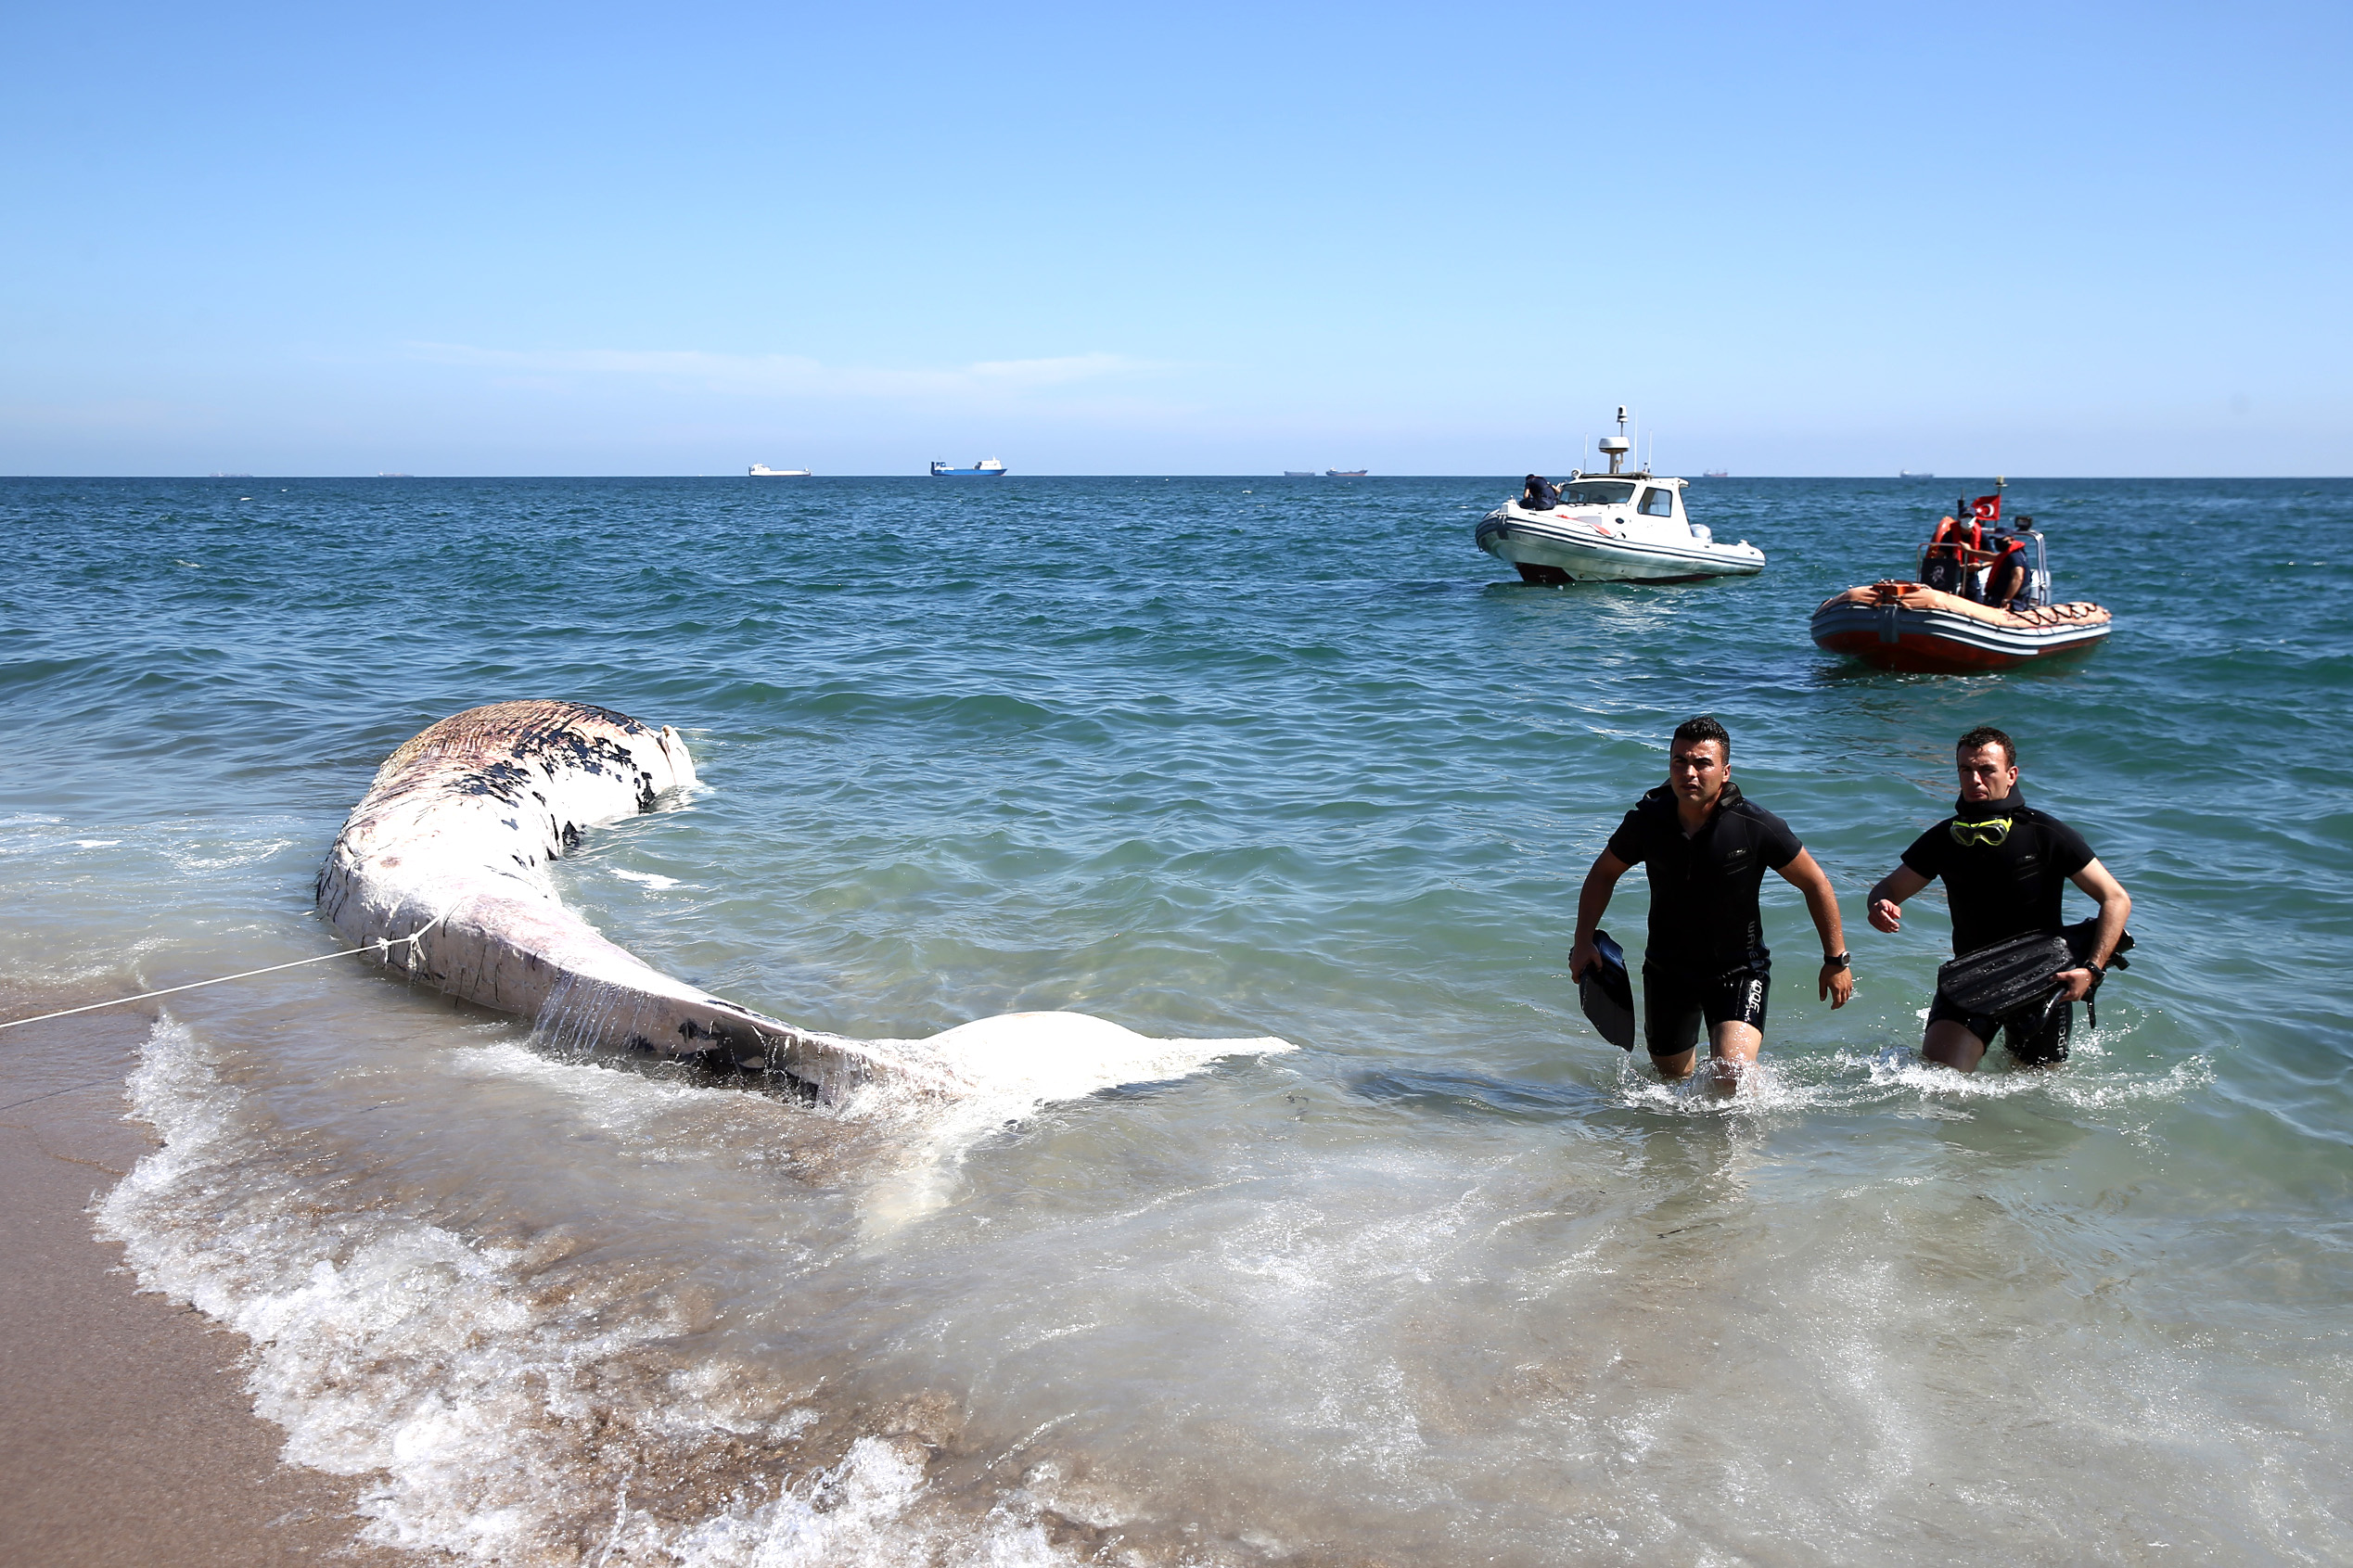 Mersin sahiline 14 metrelik oluklu balina vurdu